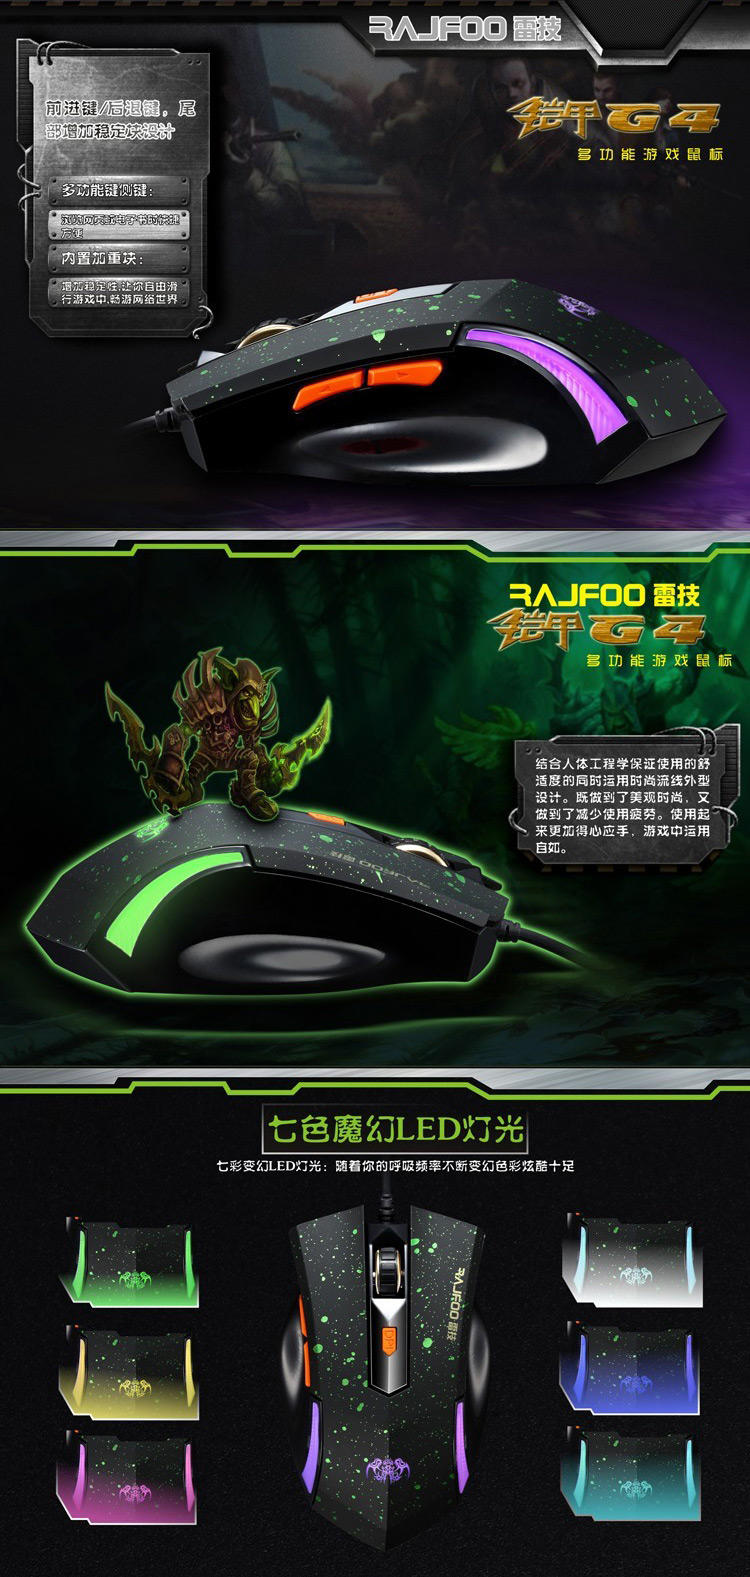 RAJFOO/雷技 鼠标 铠甲G4 有线游戏电竞鼠标 USB变速 魔兽世界CF鼠标